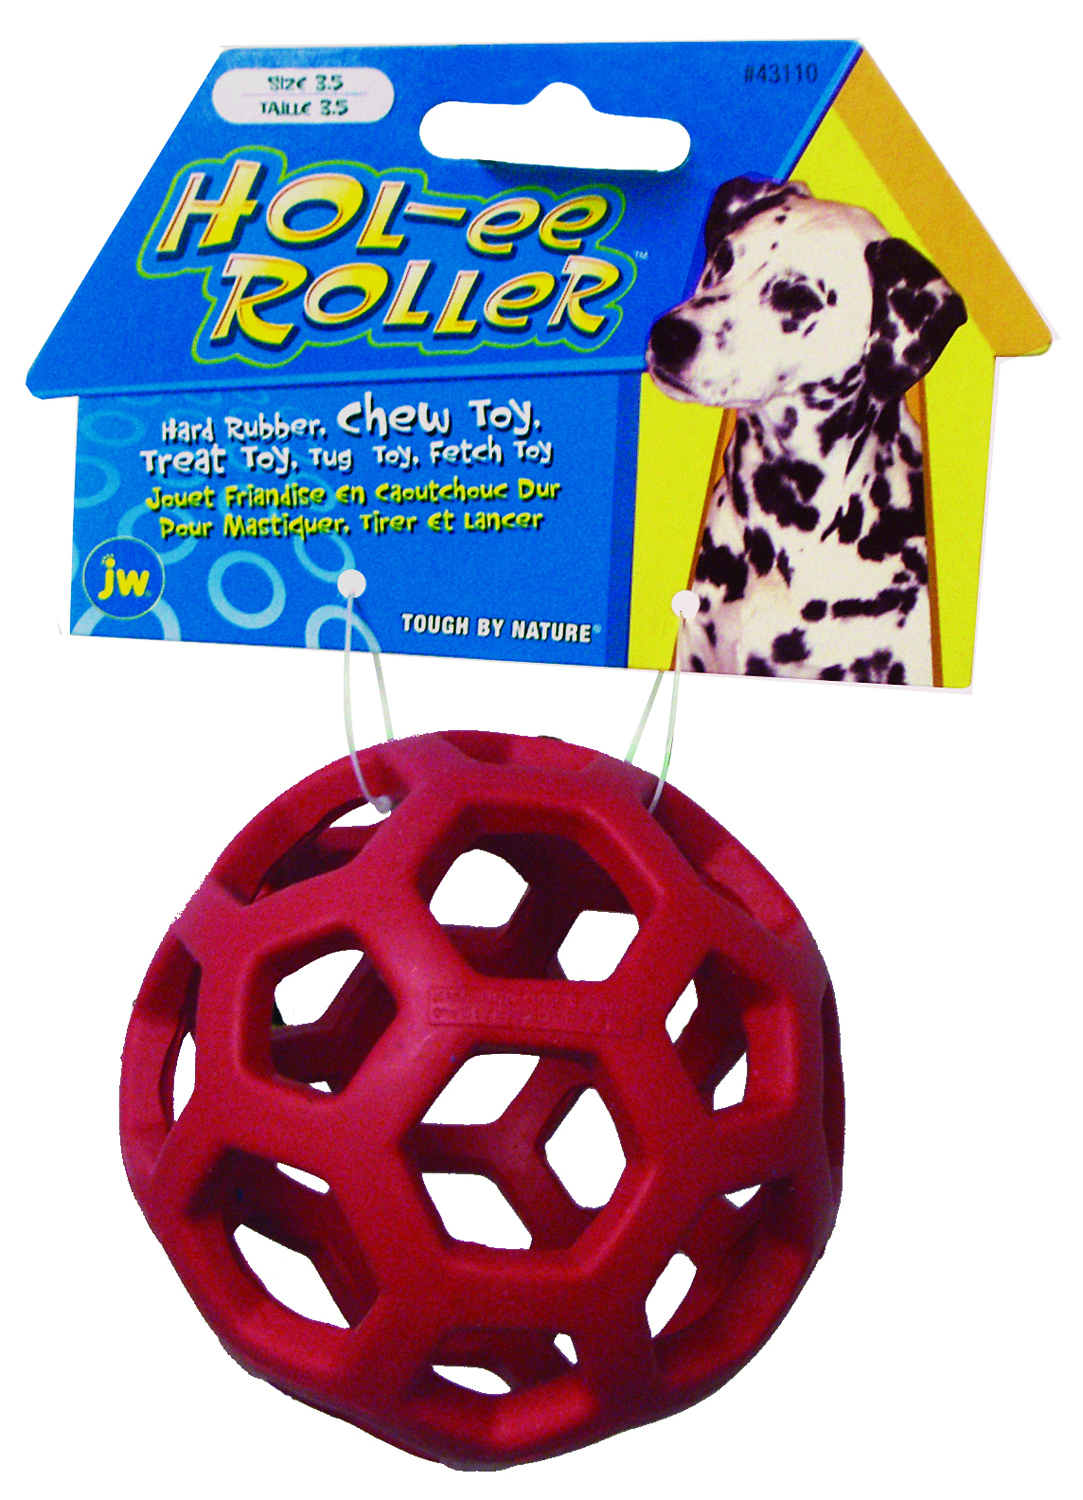 Hol-ee roller dog toy - 3.5 in